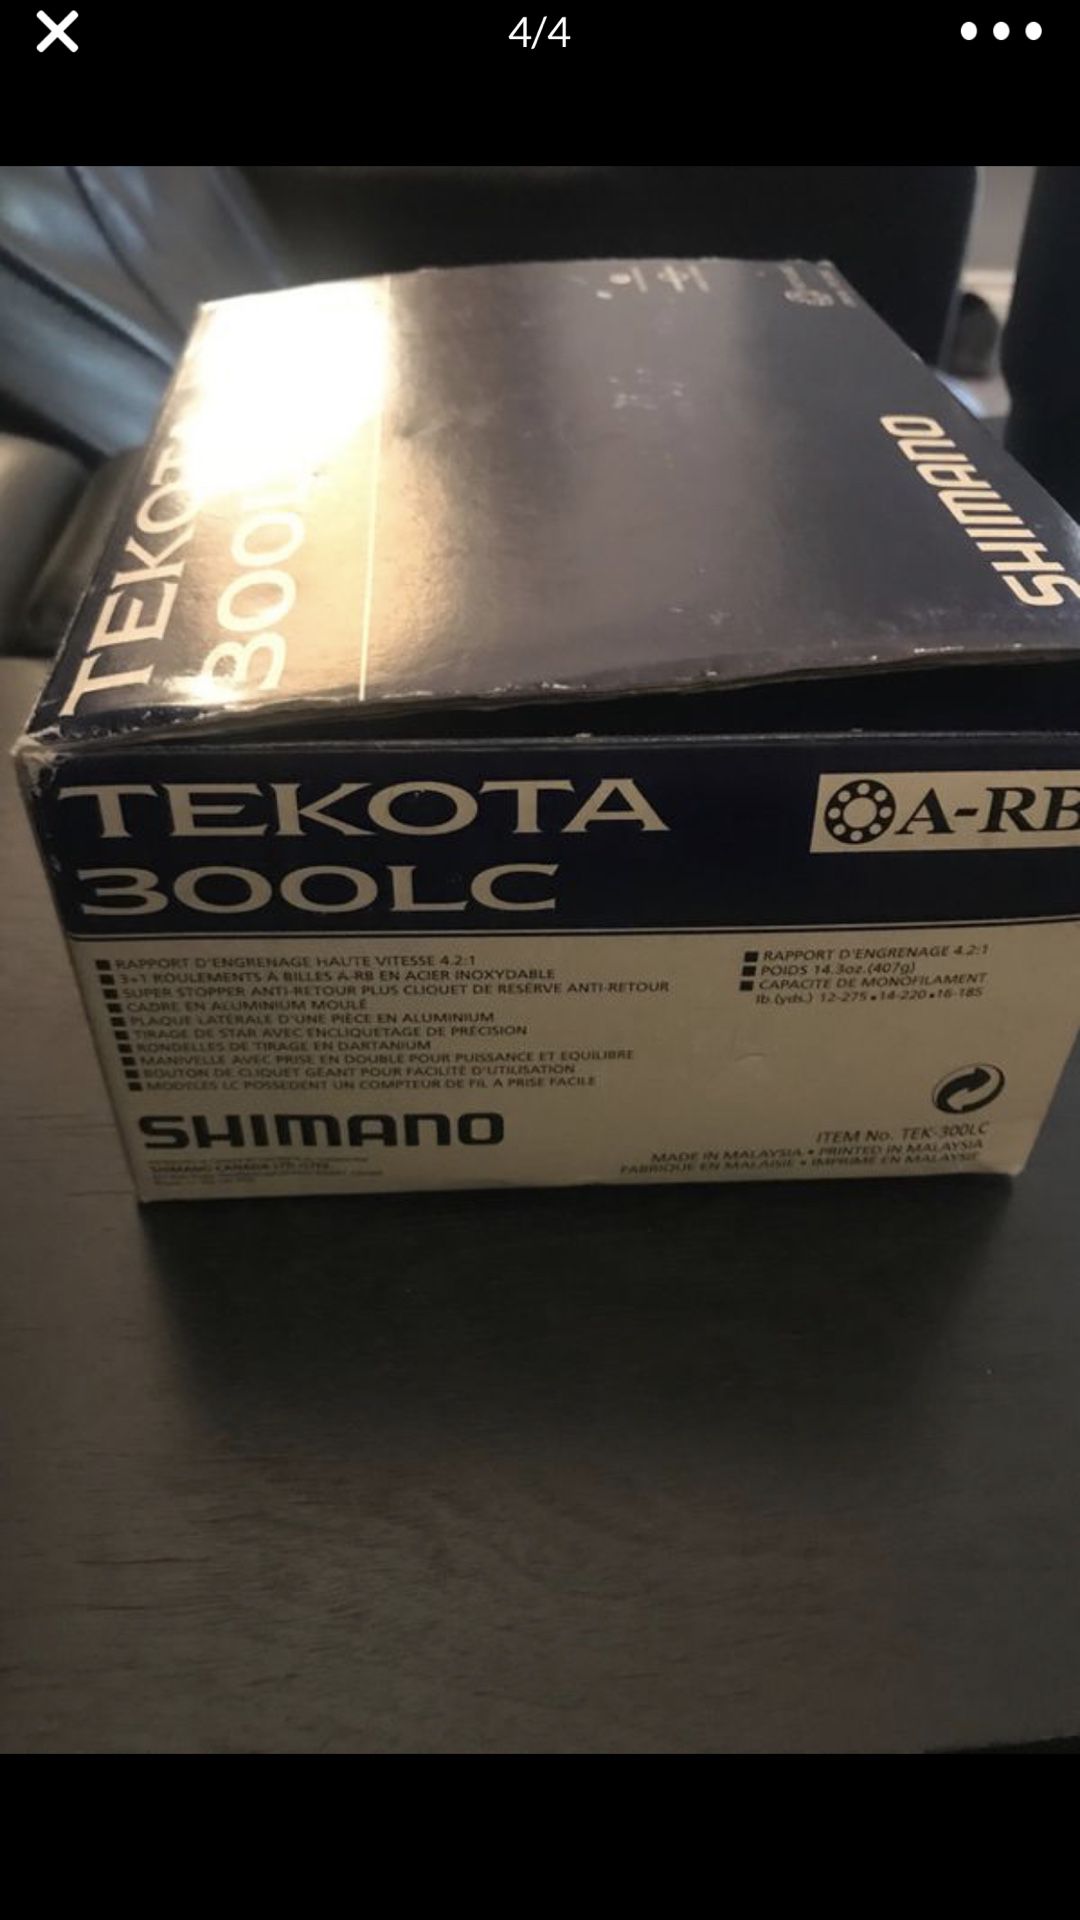 Shimano Tekota 300LC fishing Reel like new